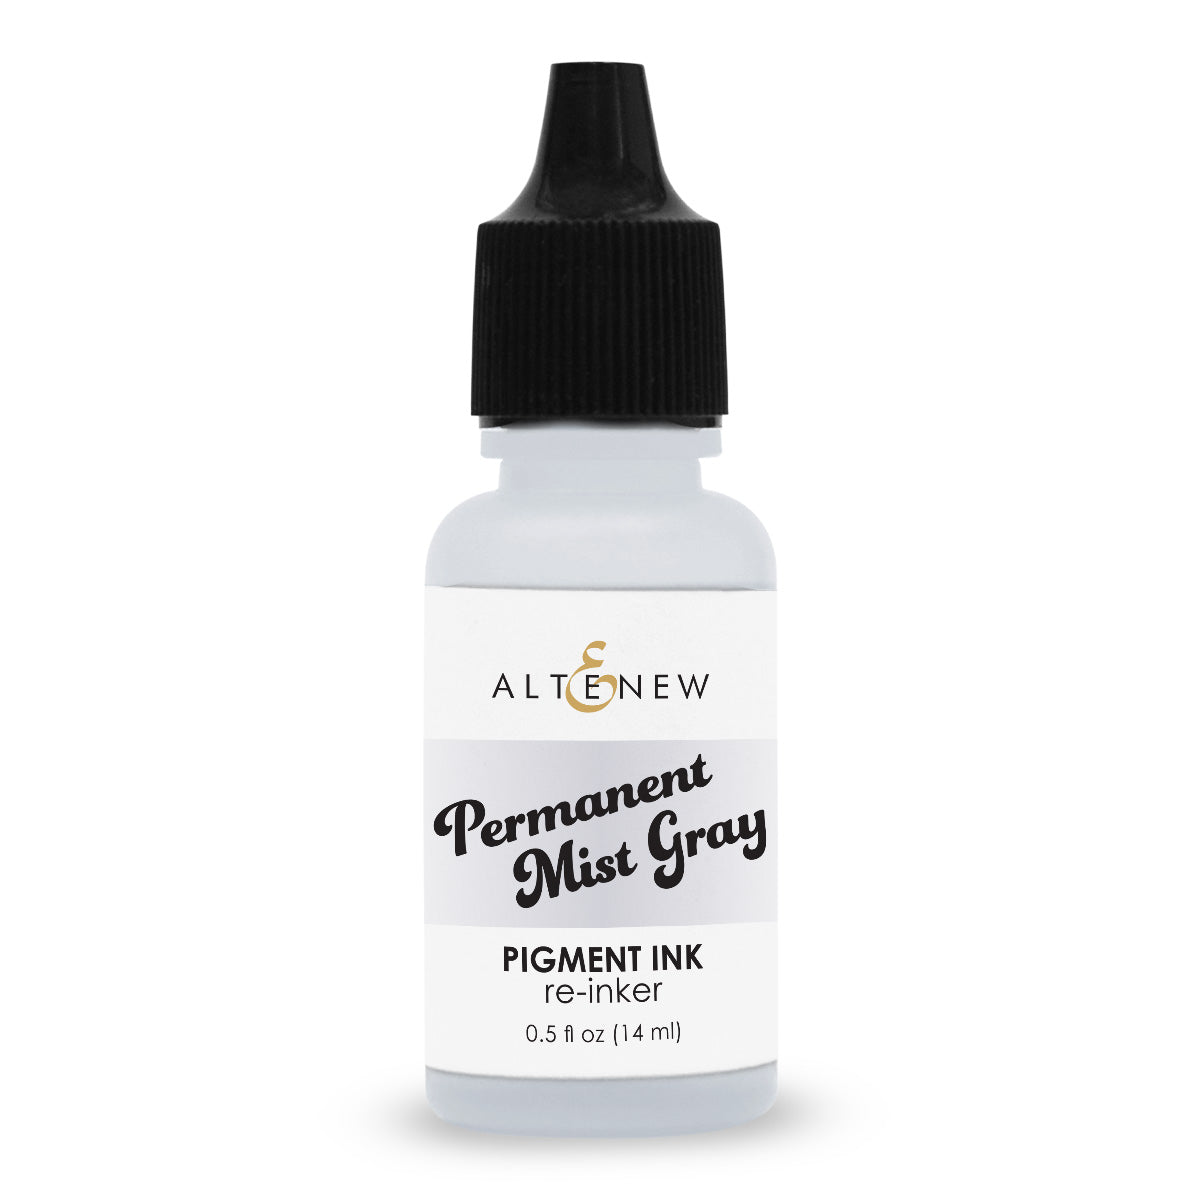 Altenew - Permanent Mist Gray Pigment Ink Re-inker 